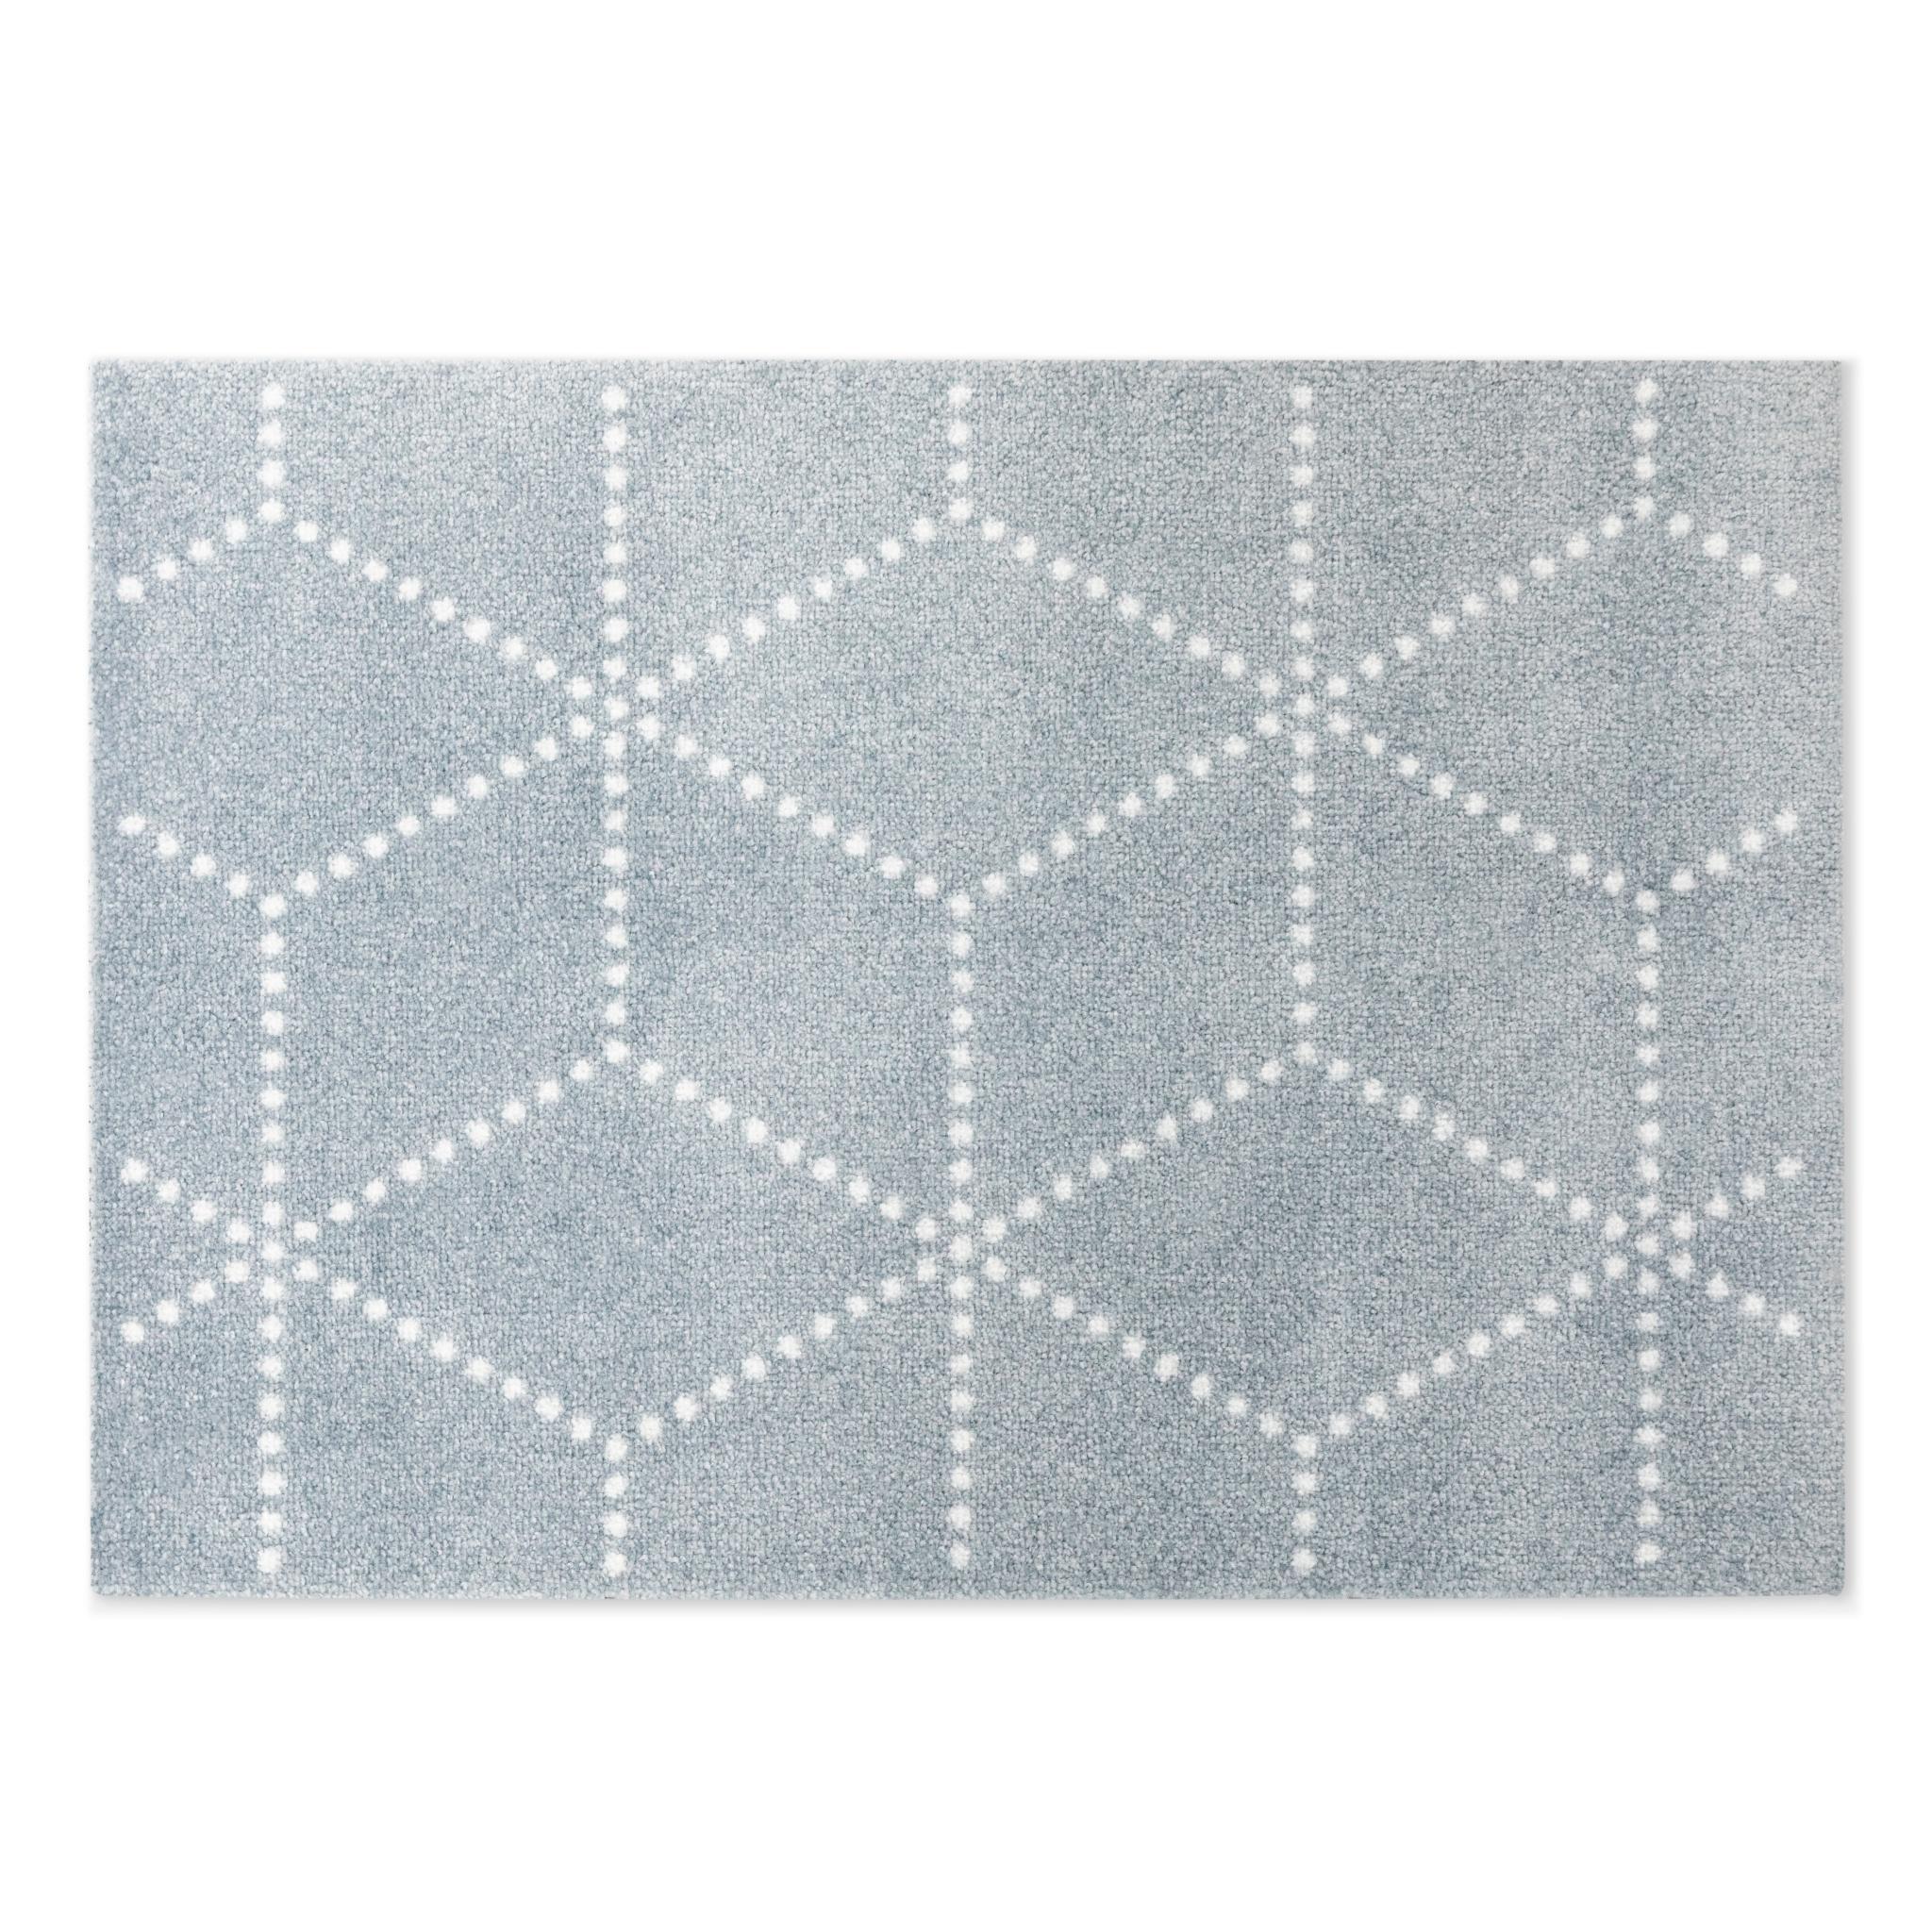 Heymat Doormat Hagl Silver, 60x85cm